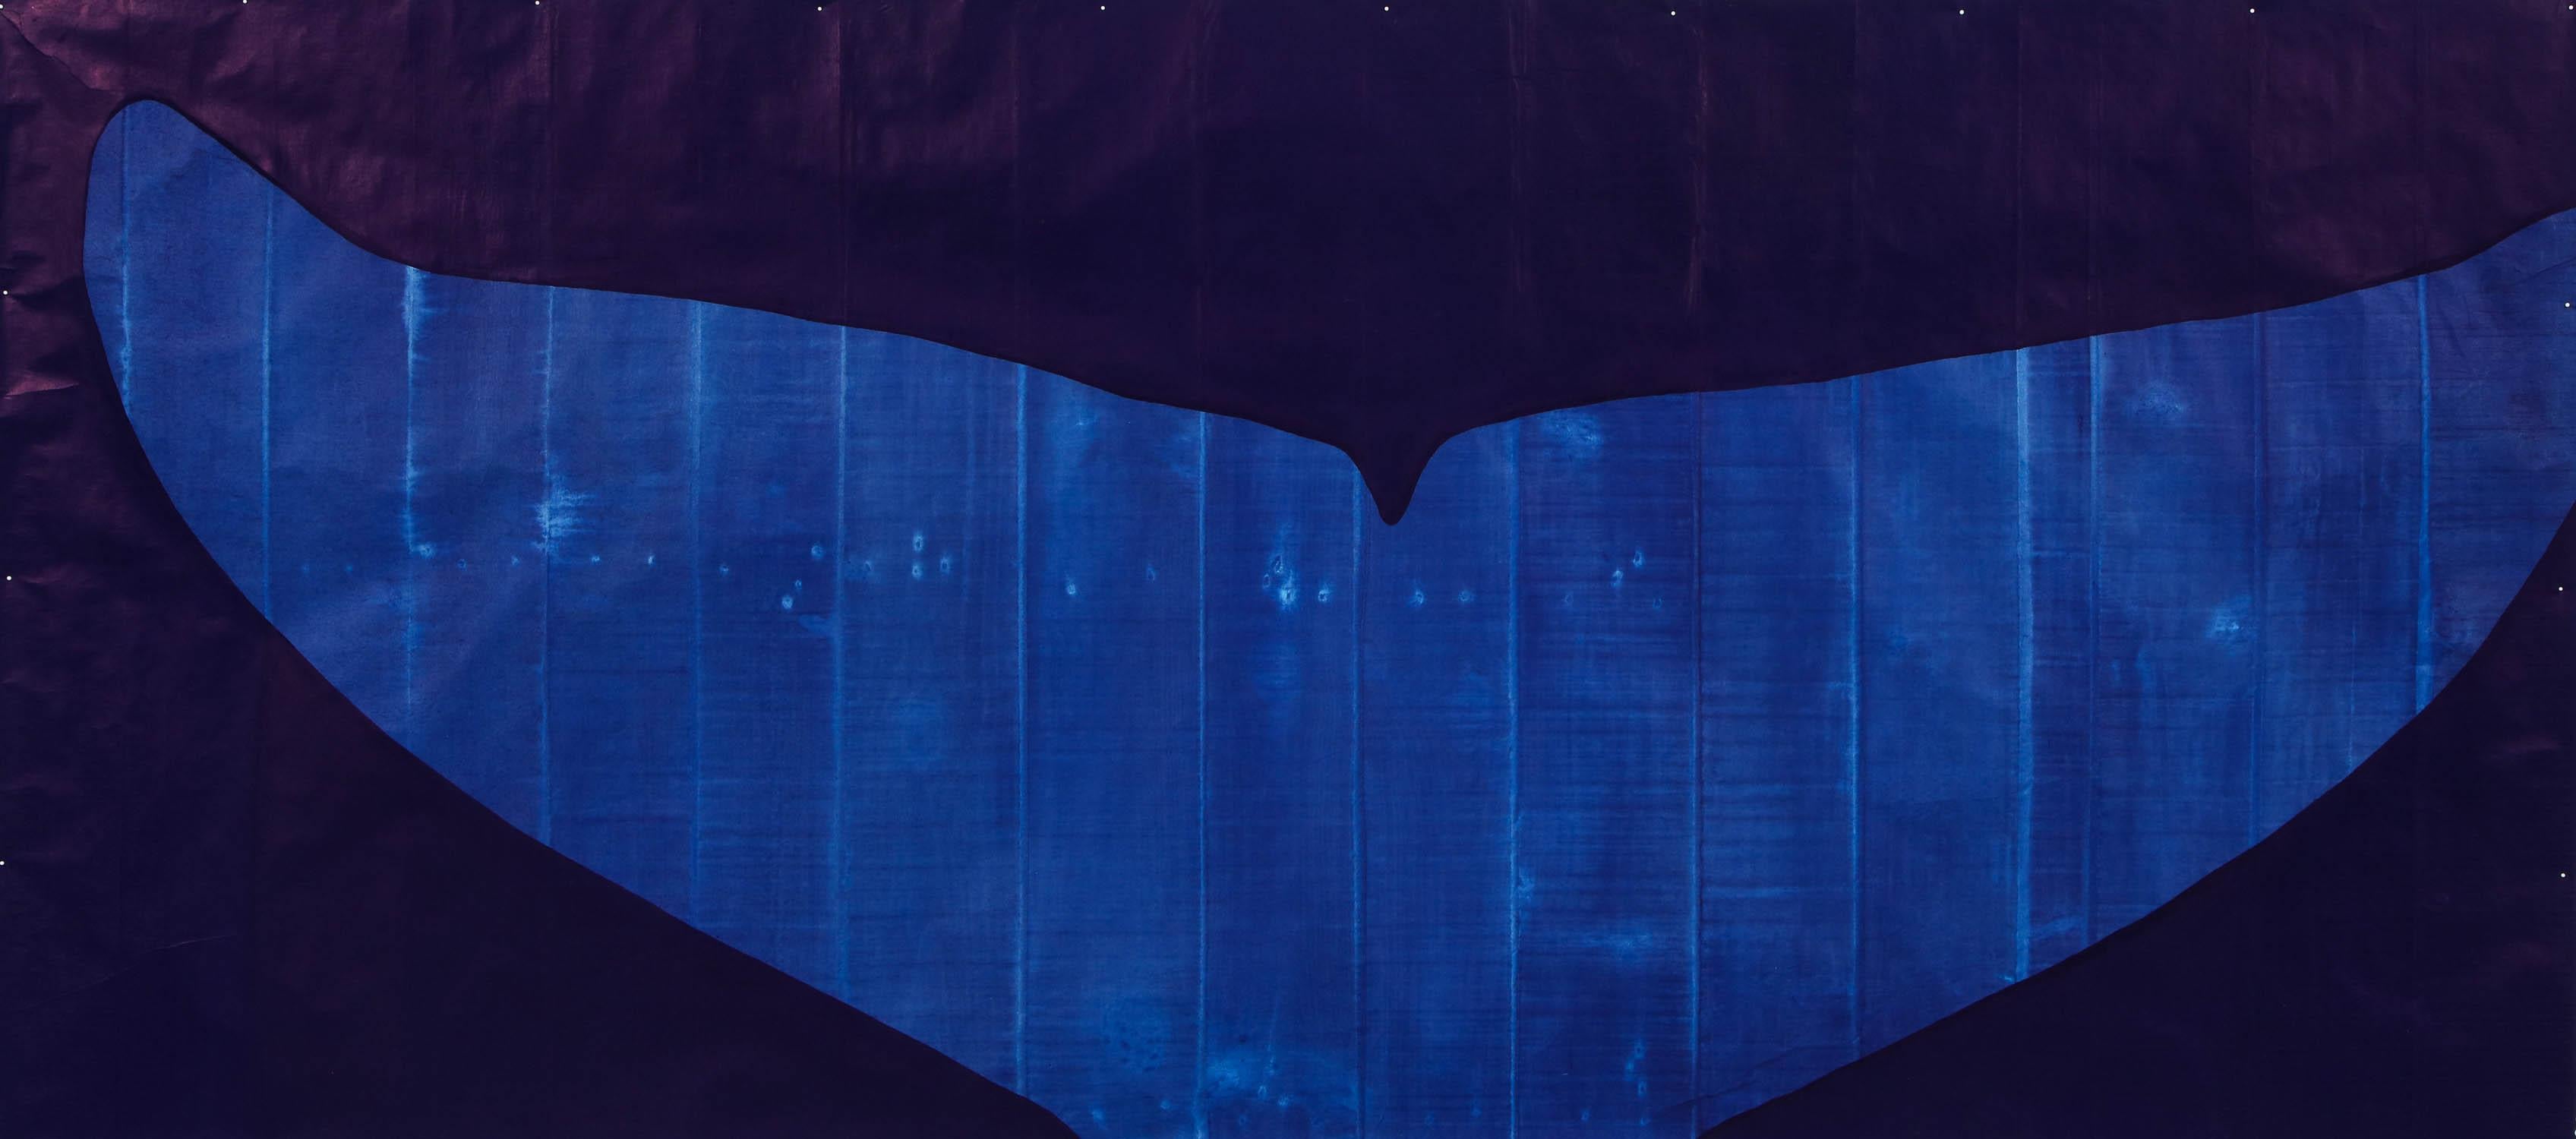 “Indigo Fluke” by julian Meredith.

Indigo Fluke, an original silk screen on rice paper by Julian Meredith. 

Measure: 83 in. long x 40 in. high x 2 in. deep (including stretcher).
 